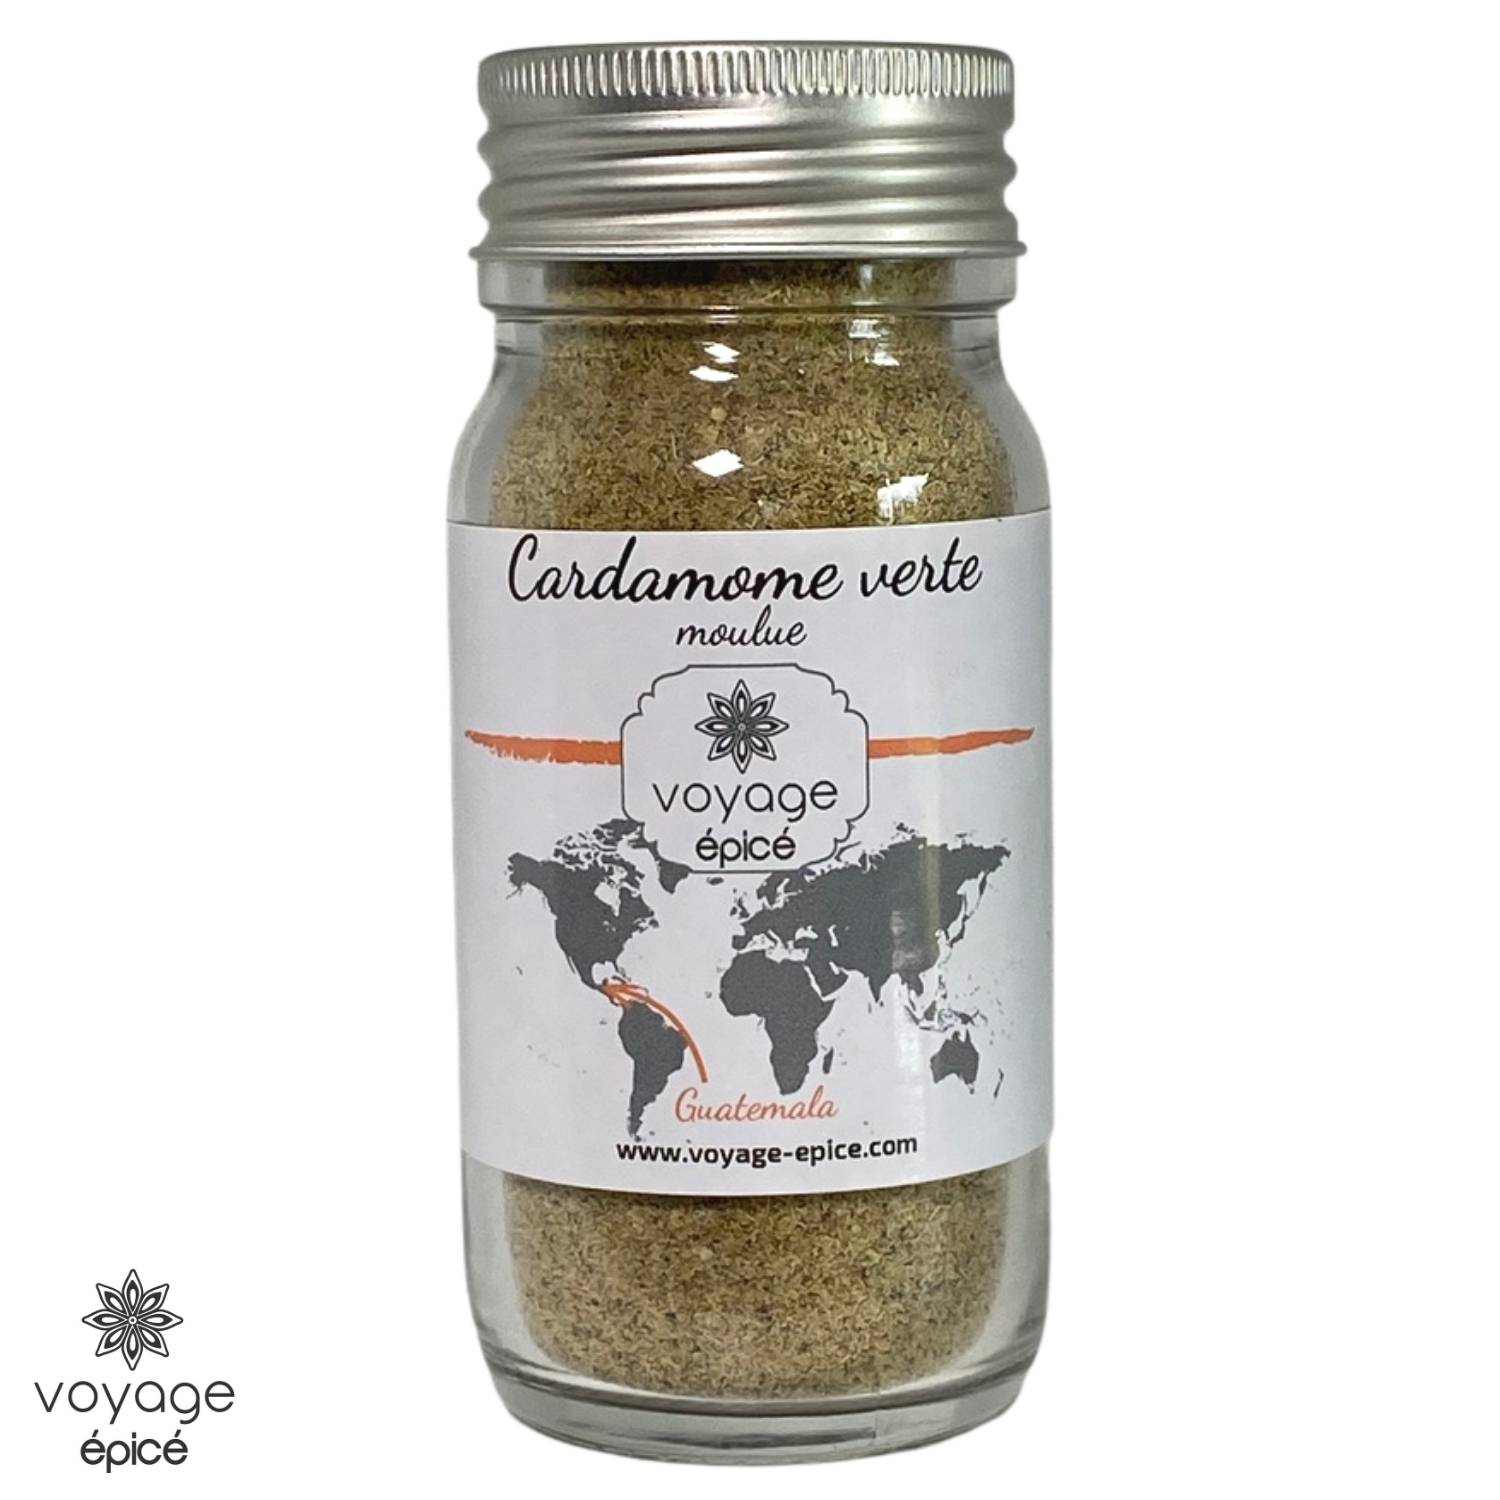 La cardamome - Tout sur la cardamome (Elettaria cardamomum), origine,  propriétés et utilisation en cuisine